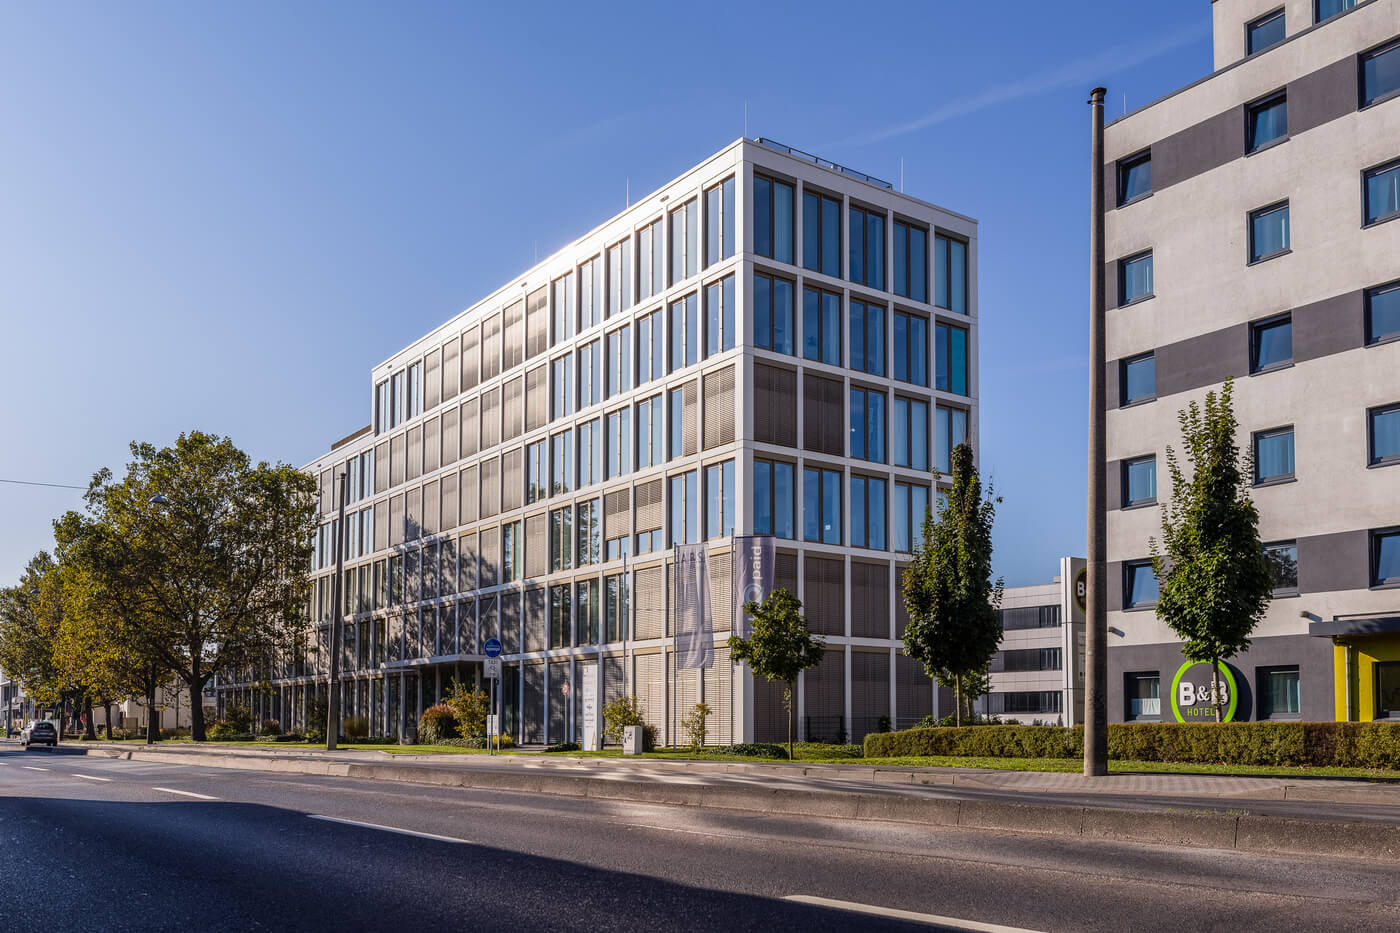 Objekt: Bürogebäude Ort: Wiesbaden Gewerke: Heizung, Sanitär, Kälte _